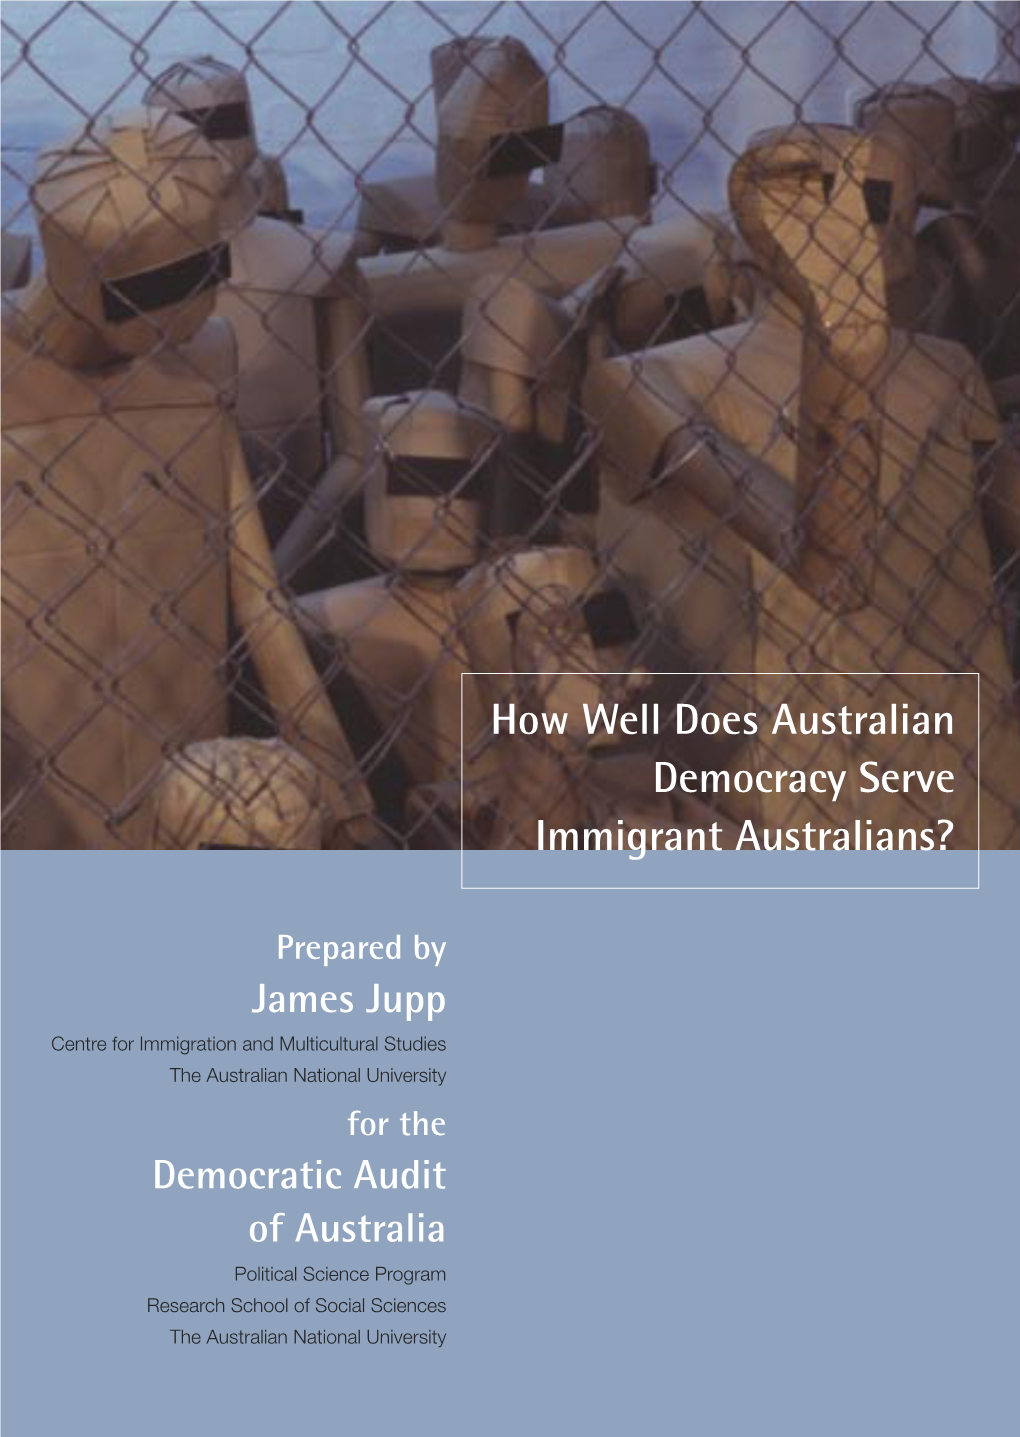 How Well Does Australian Democracy Serve Immigrant Australians?